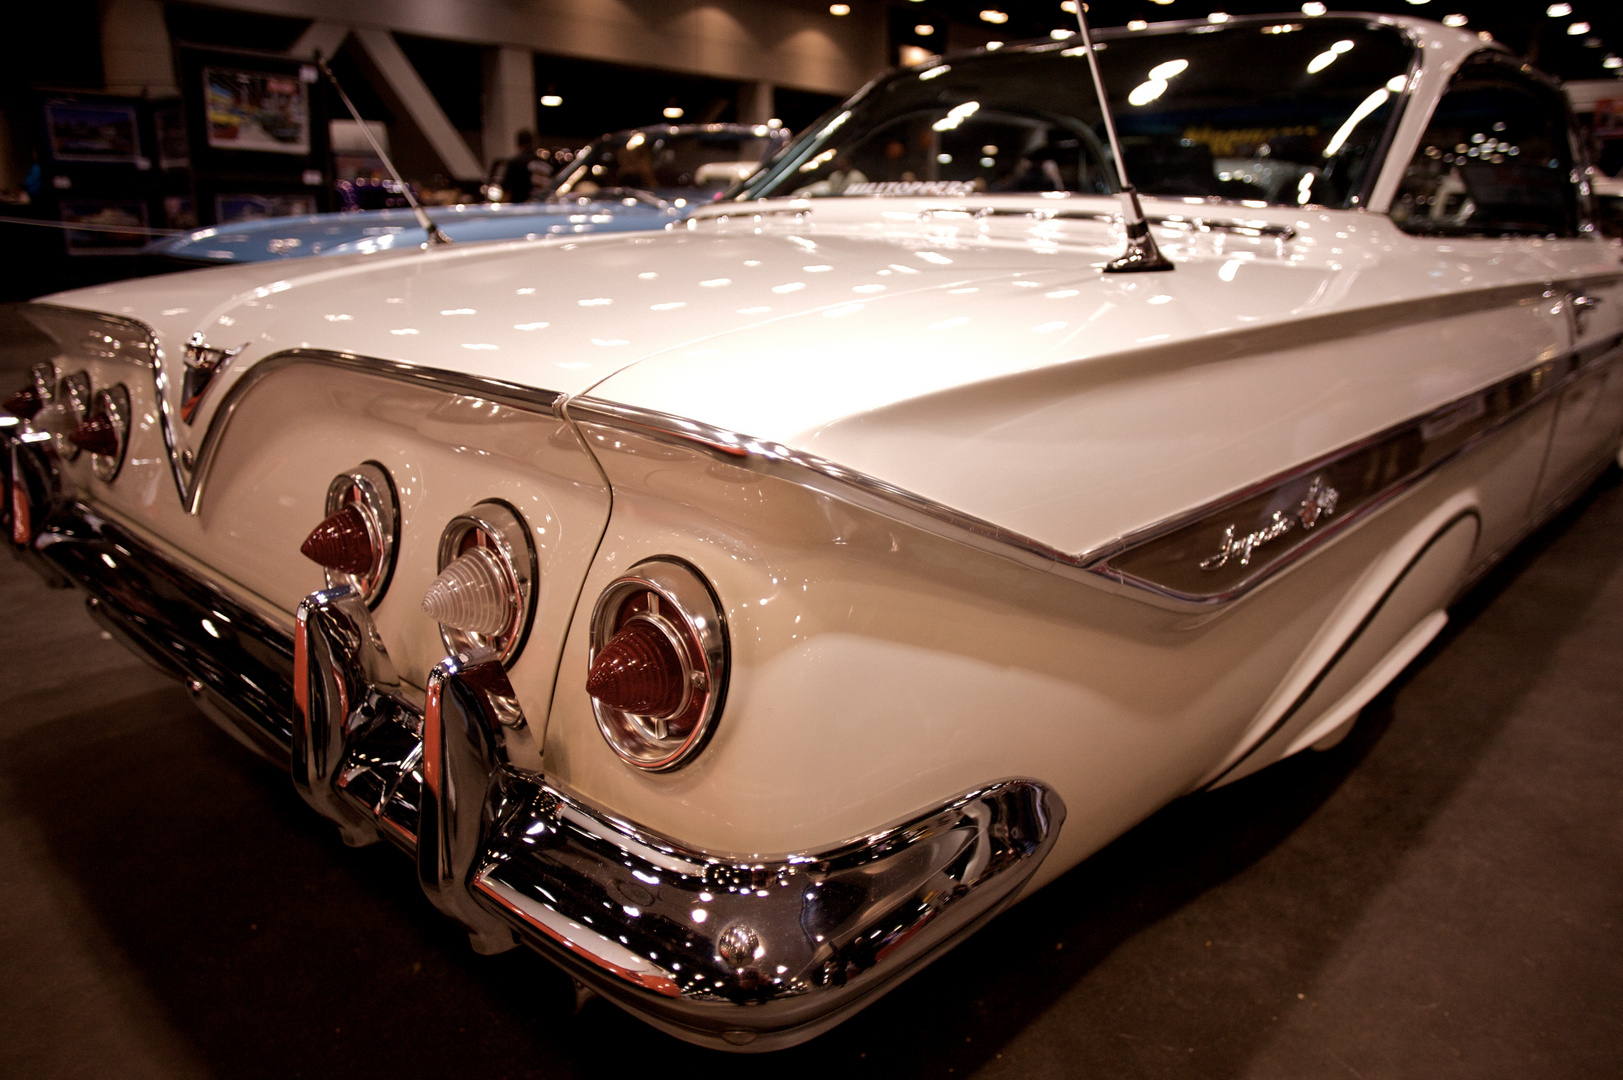 '62 Chevy Impala